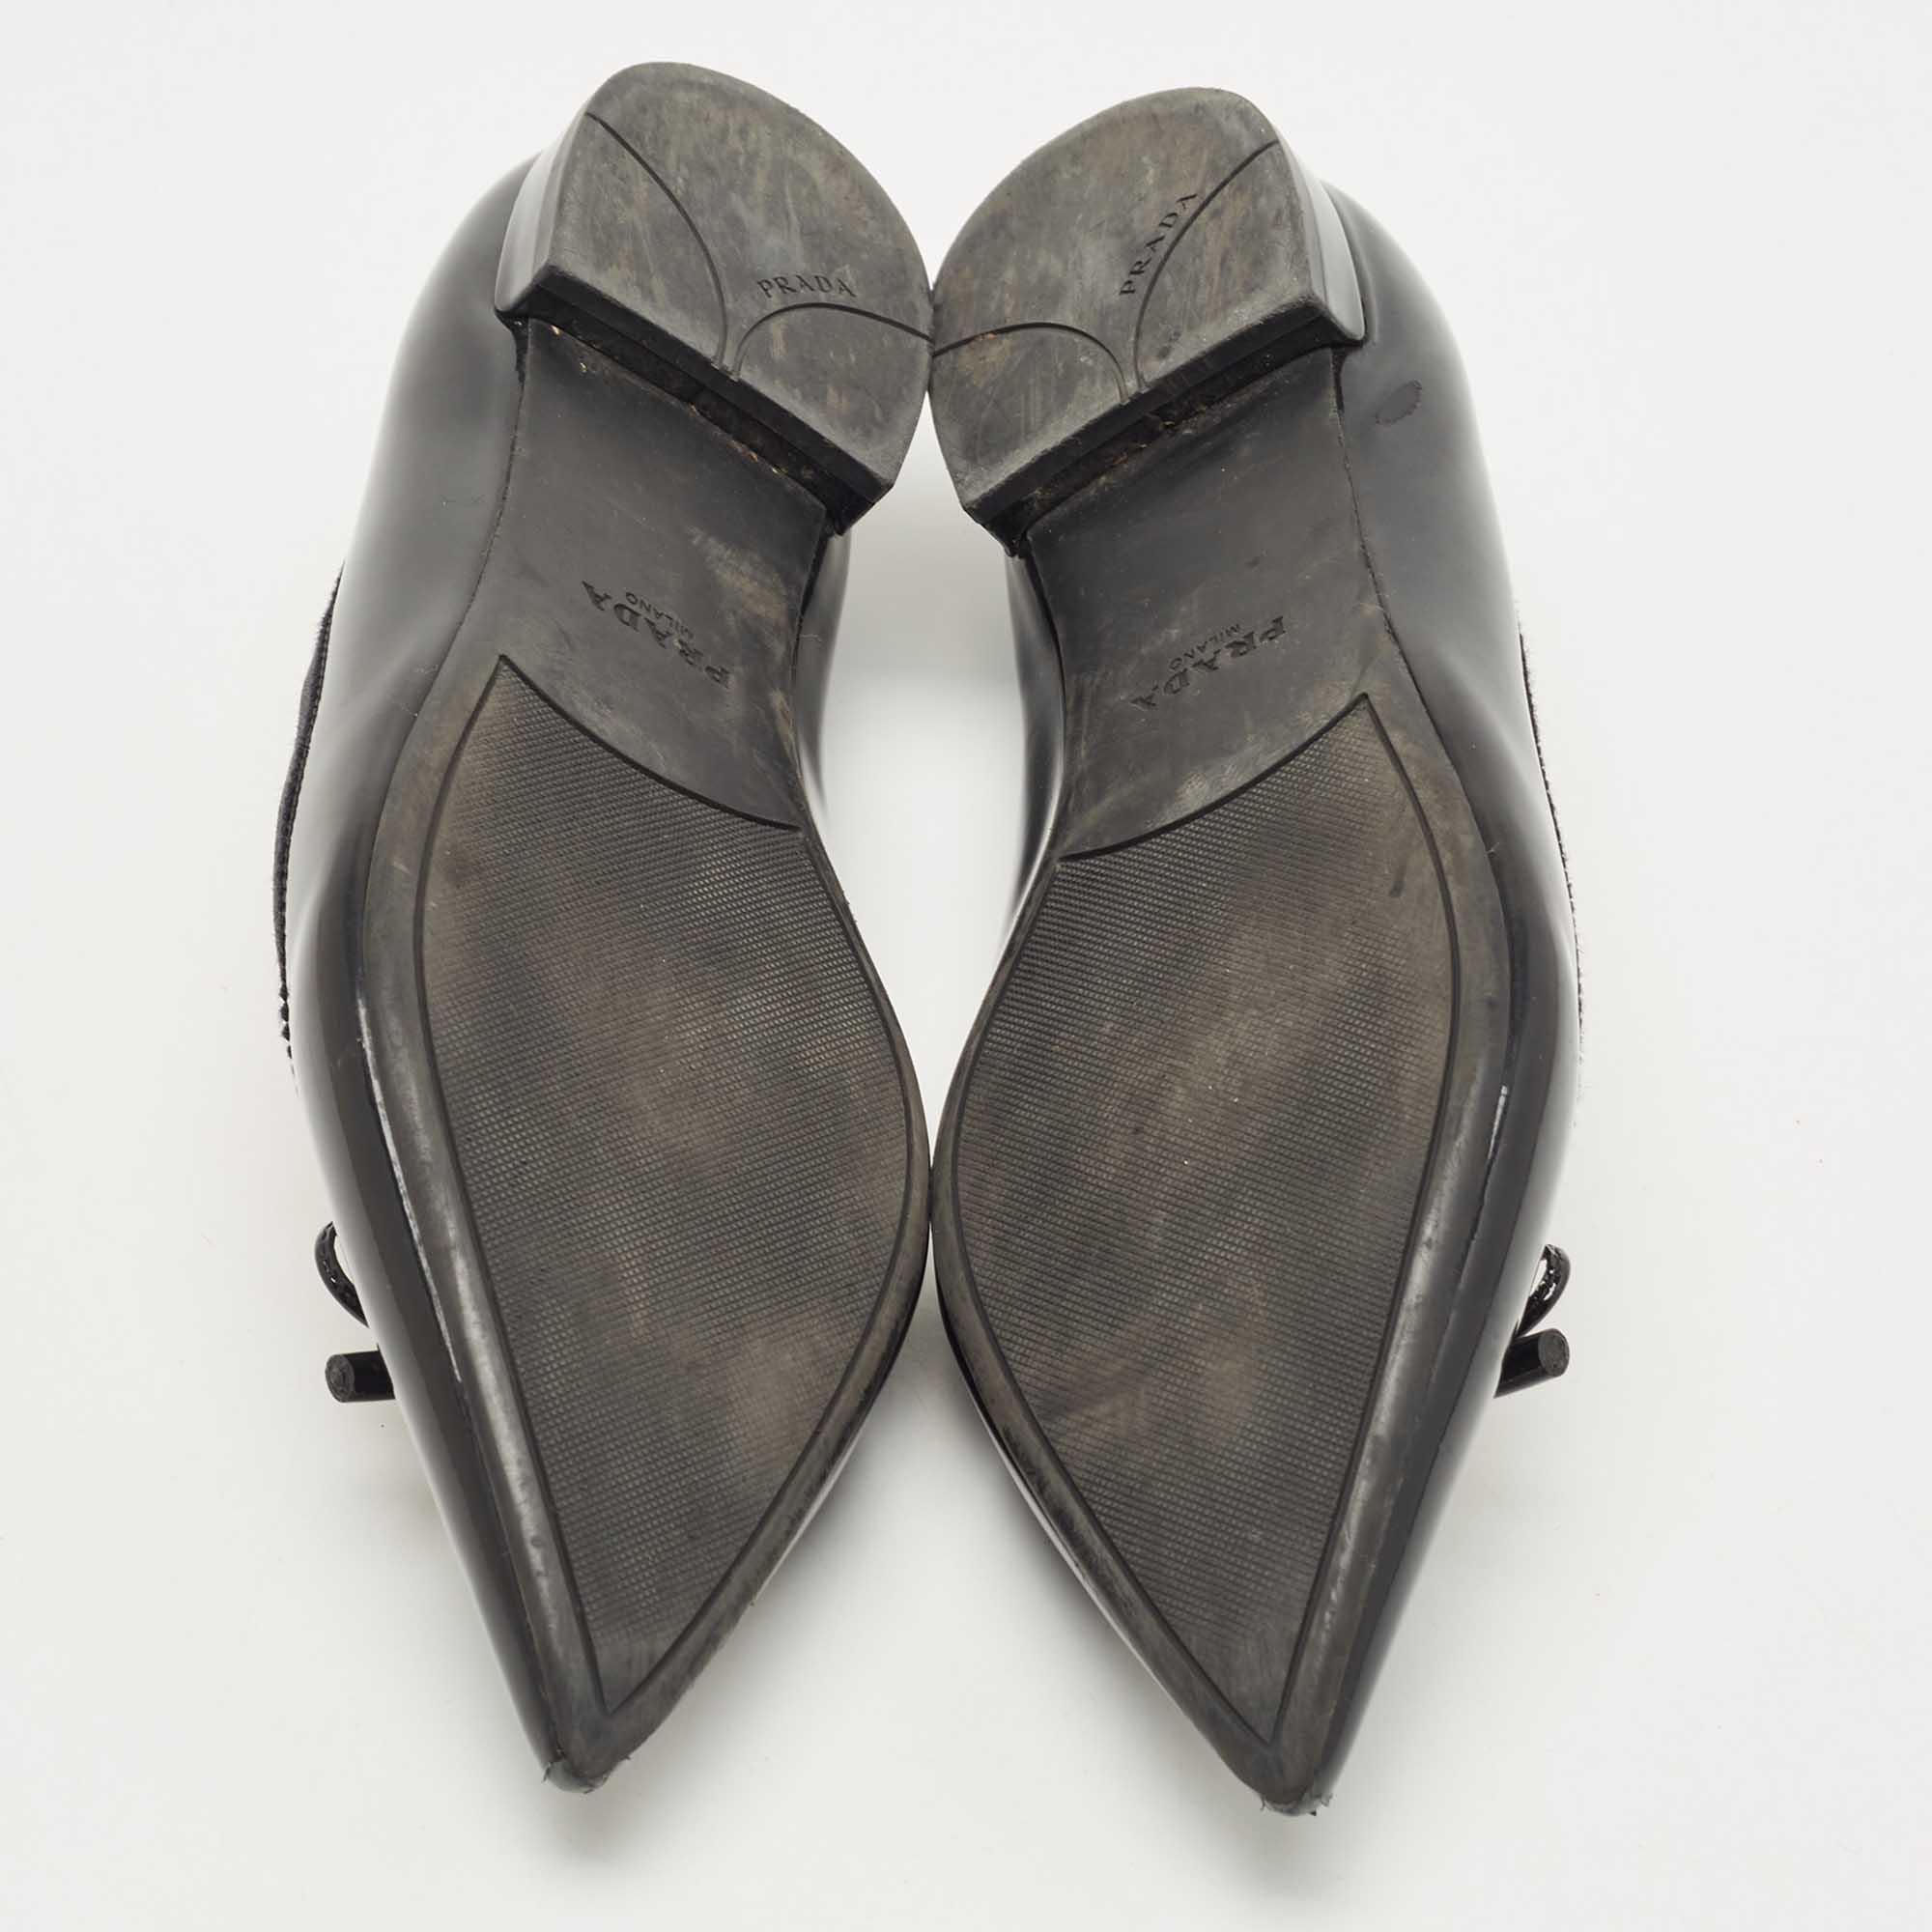 Prada Black Patent Leather Bow Ballet Flats Size 37.5